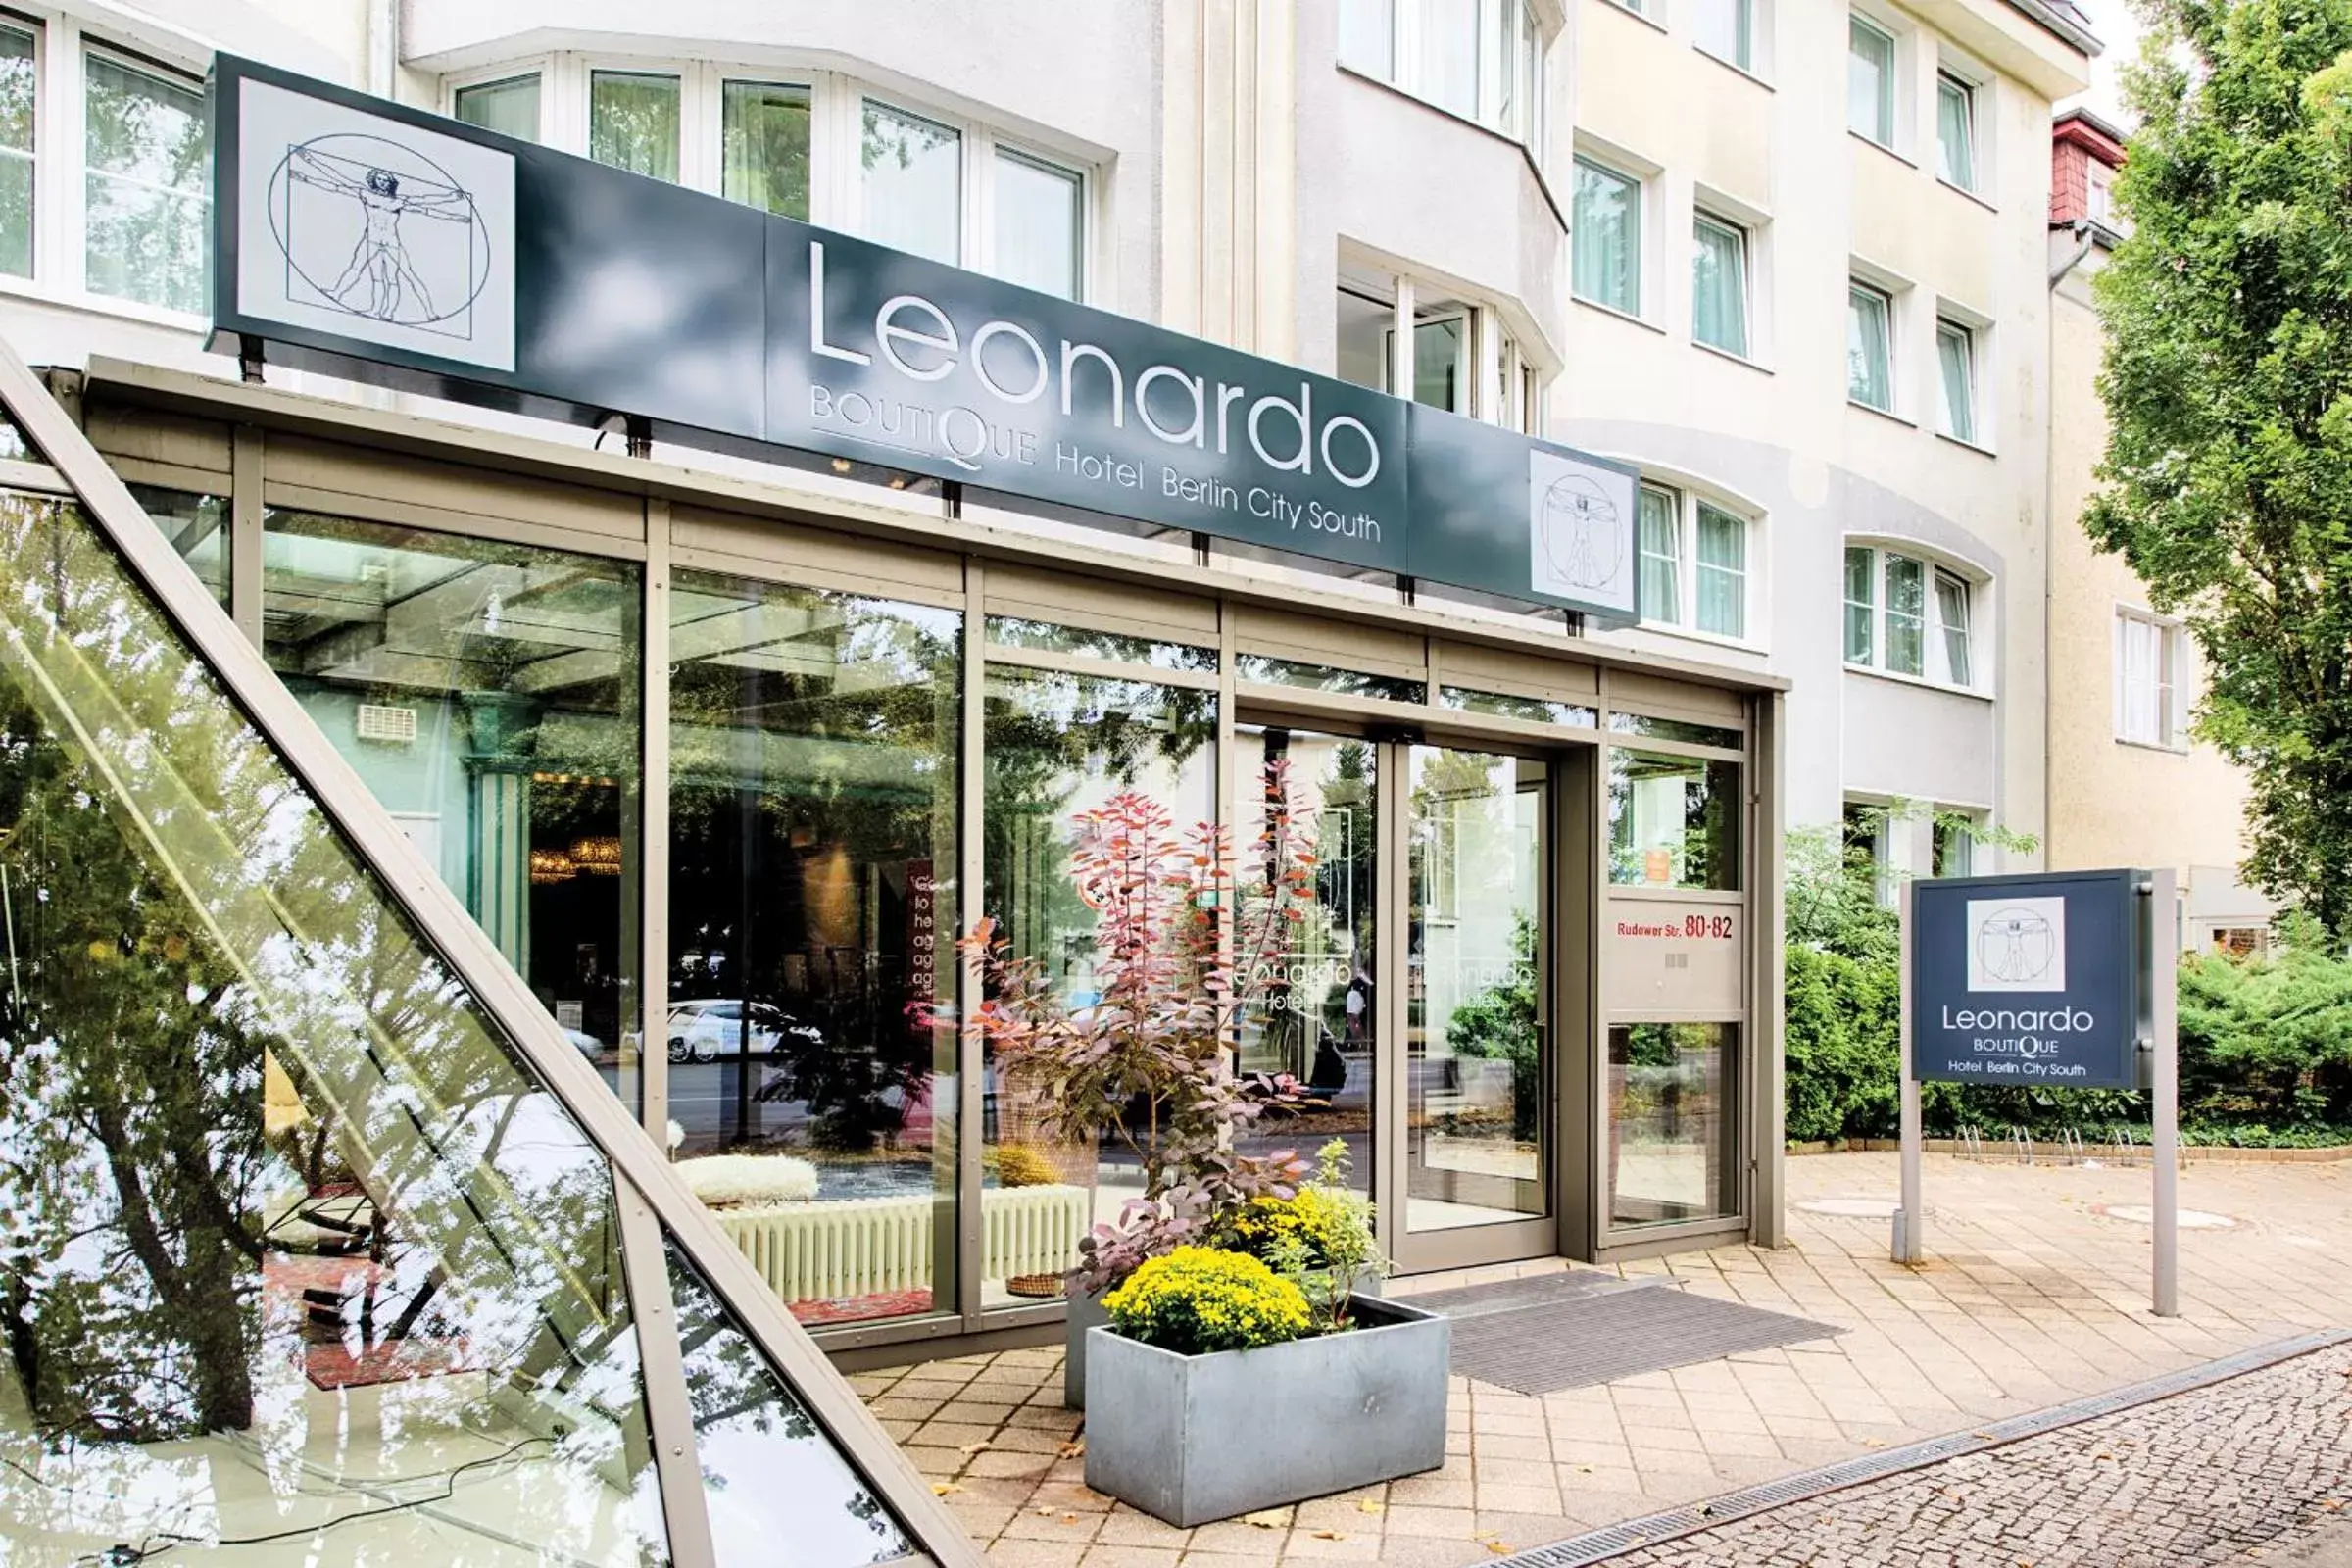 Facade/entrance in Leonardo Boutique Hotel Berlin City South